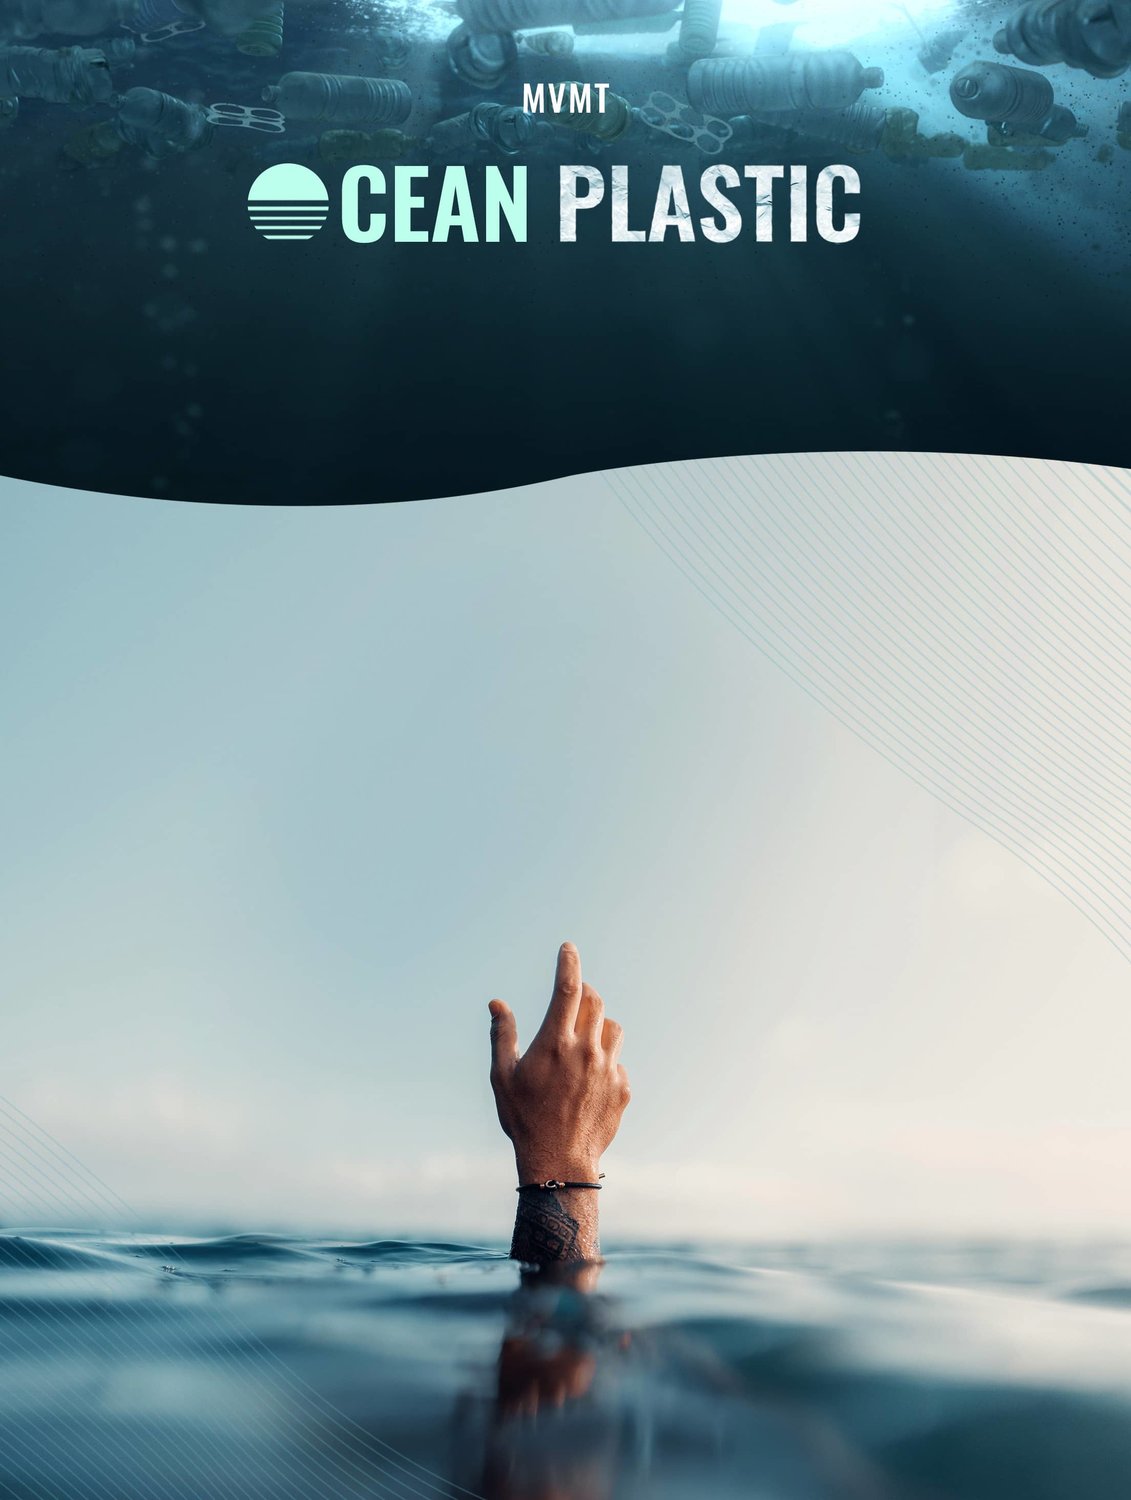 MVMT Ocean Plastic Featuring #TIde